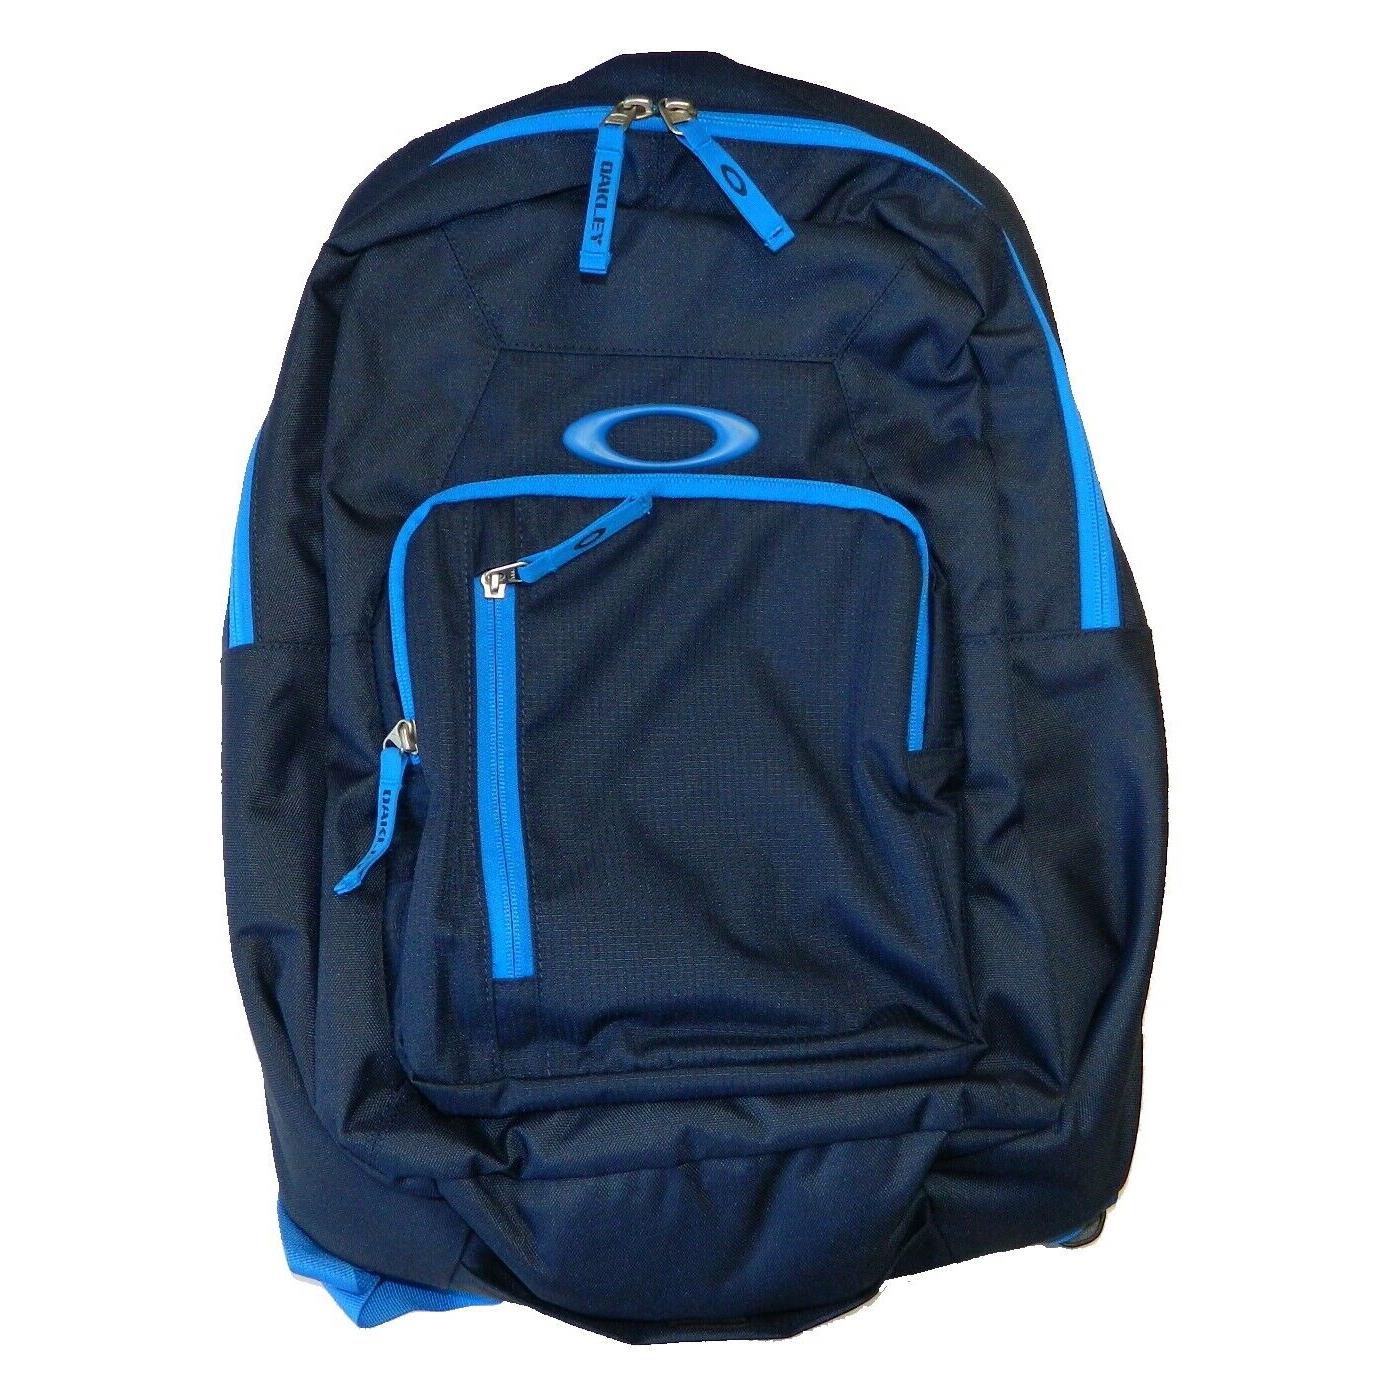 Oakley Works Pack 20L Storm Backpack Peacoat Navy Blue Laptop Sleeve